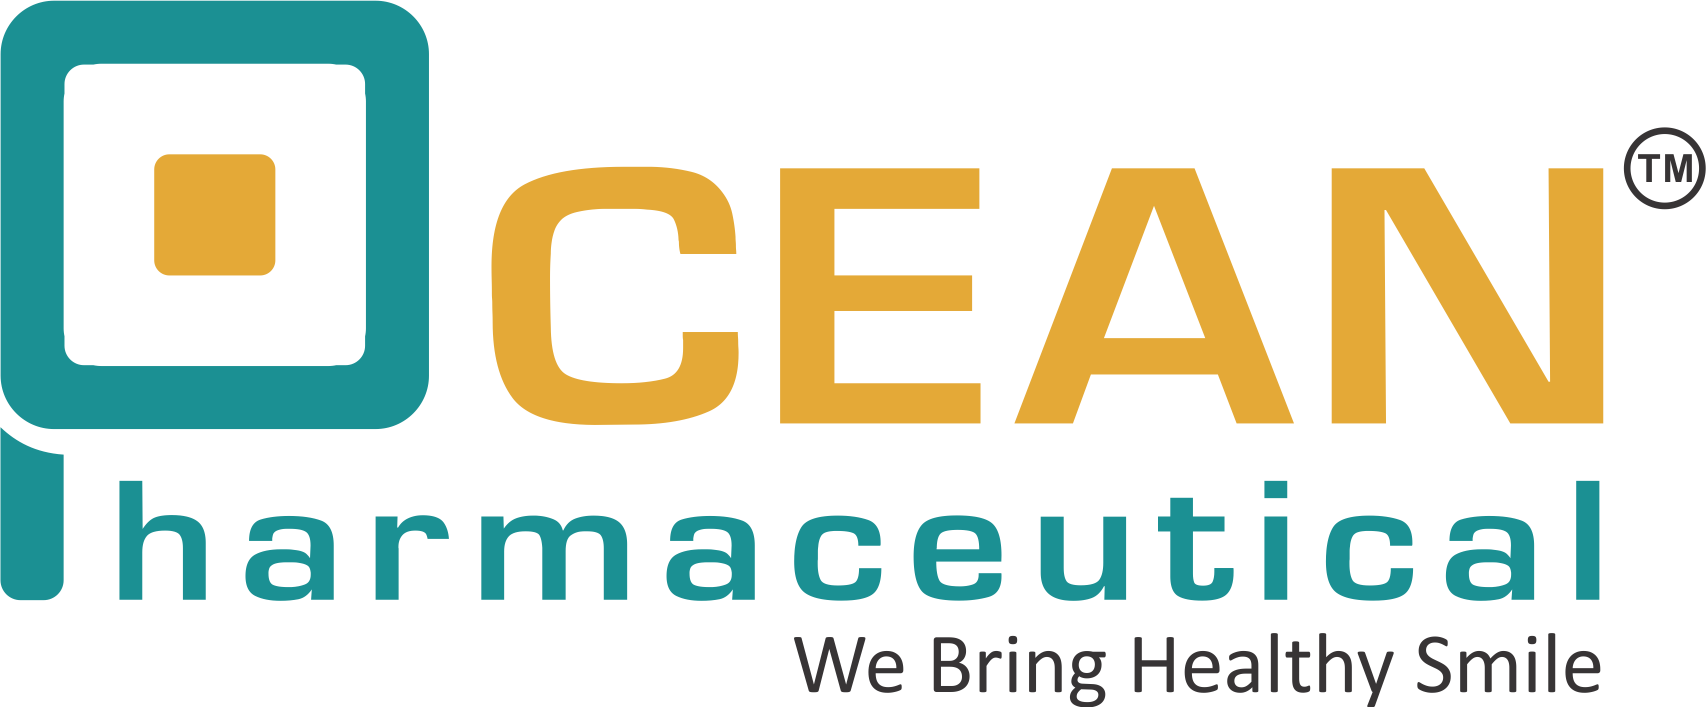 Ocean Logo